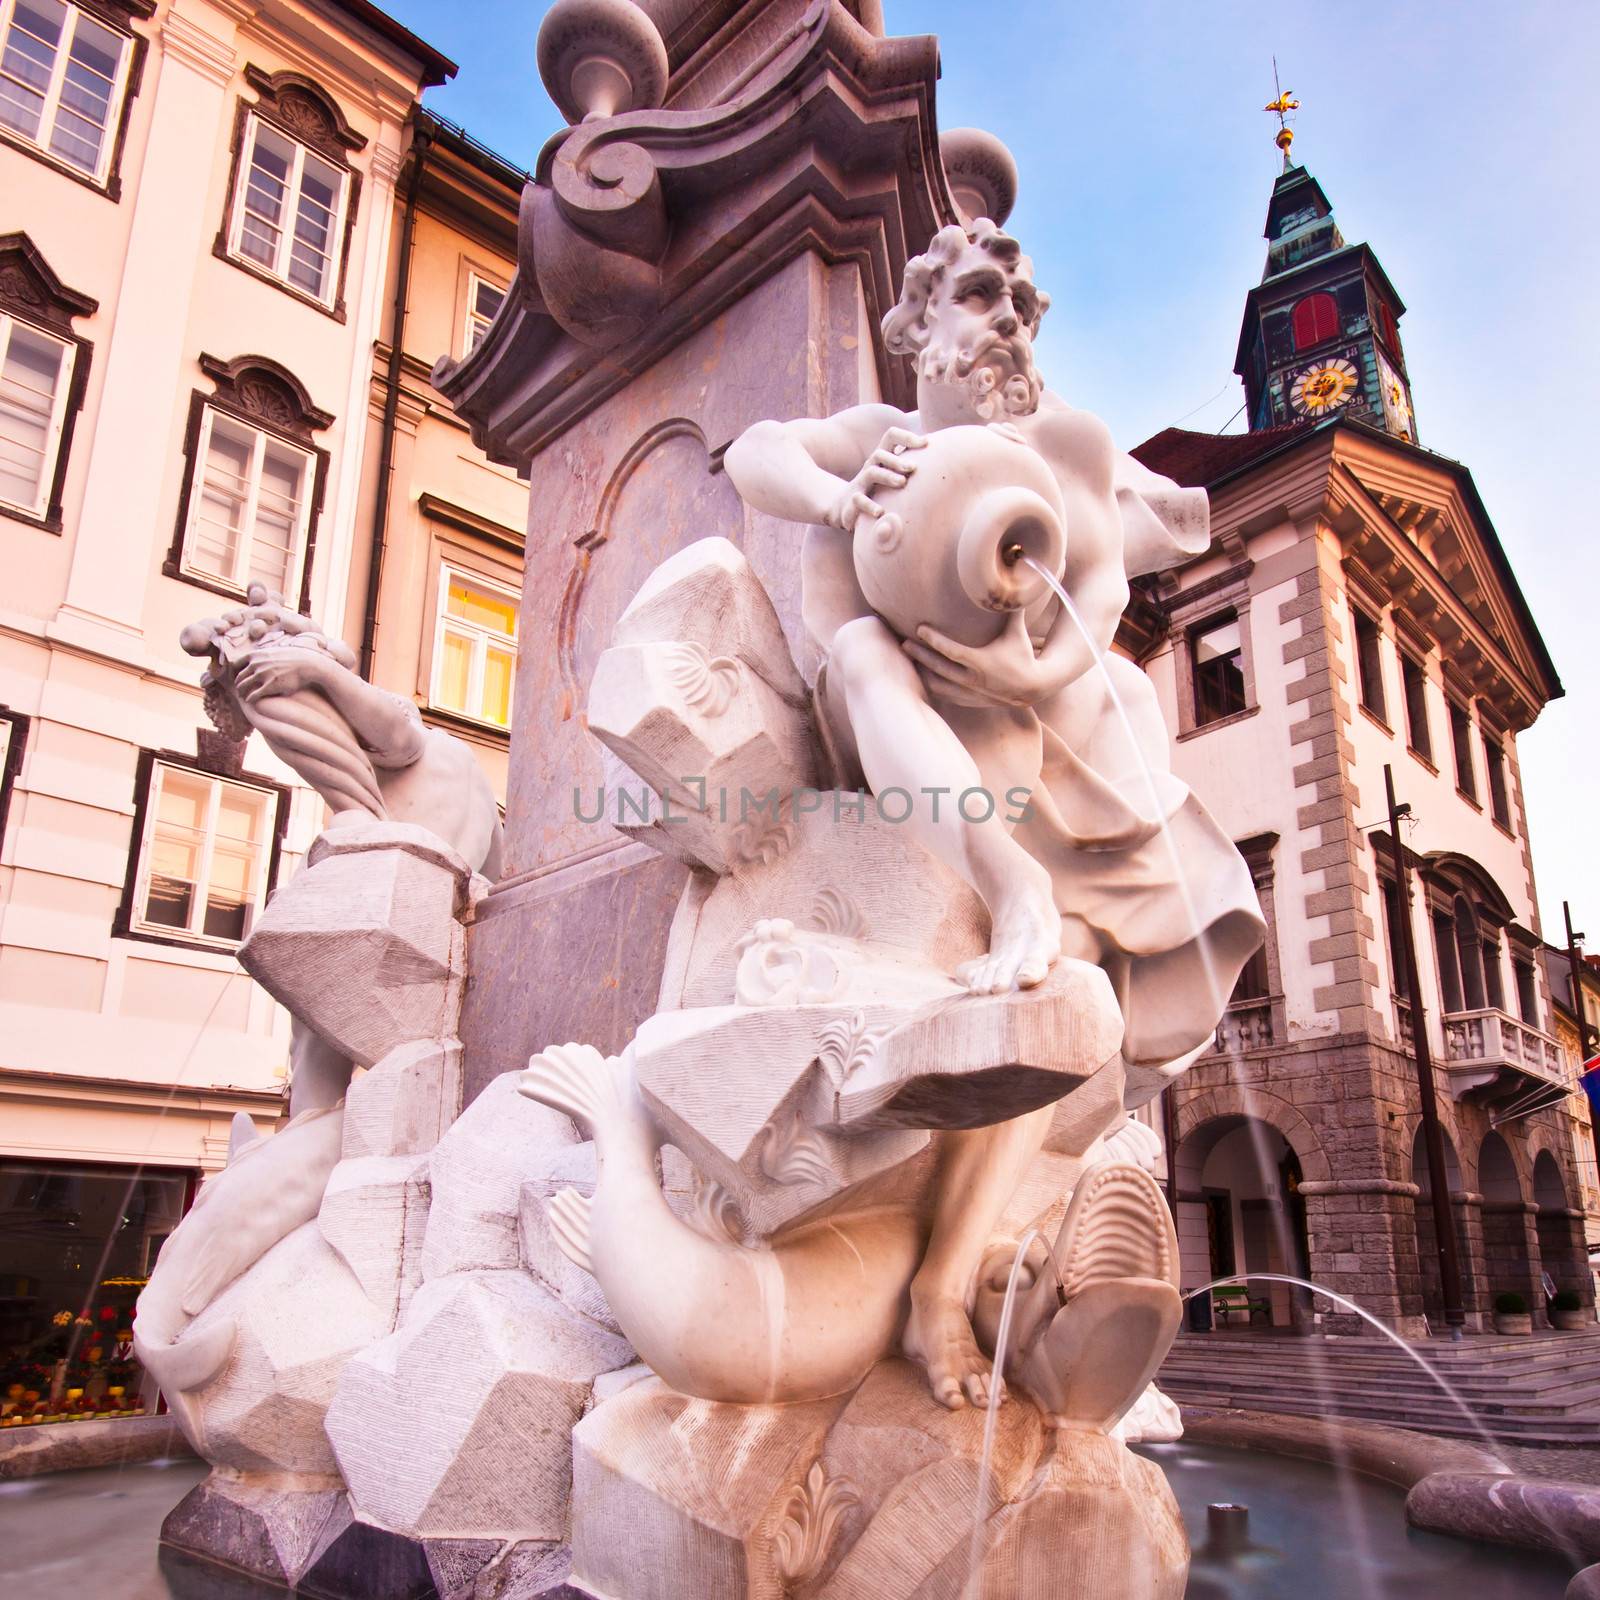 Ljubljana's city hall fountain by kasto